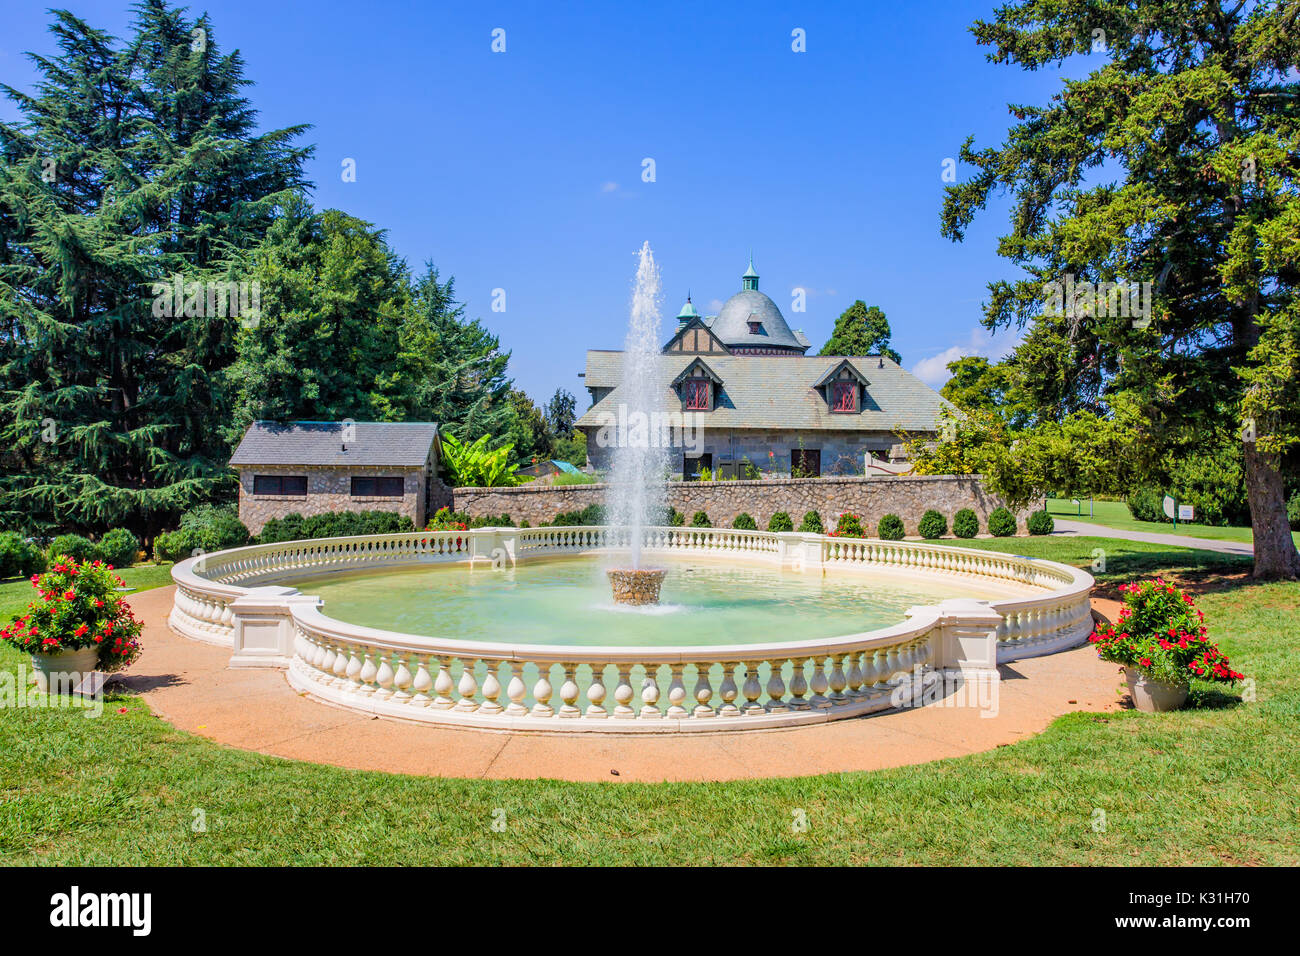 Fountain Court at Maymont Estate, Richmond, VA - August 2017. Stock Photo